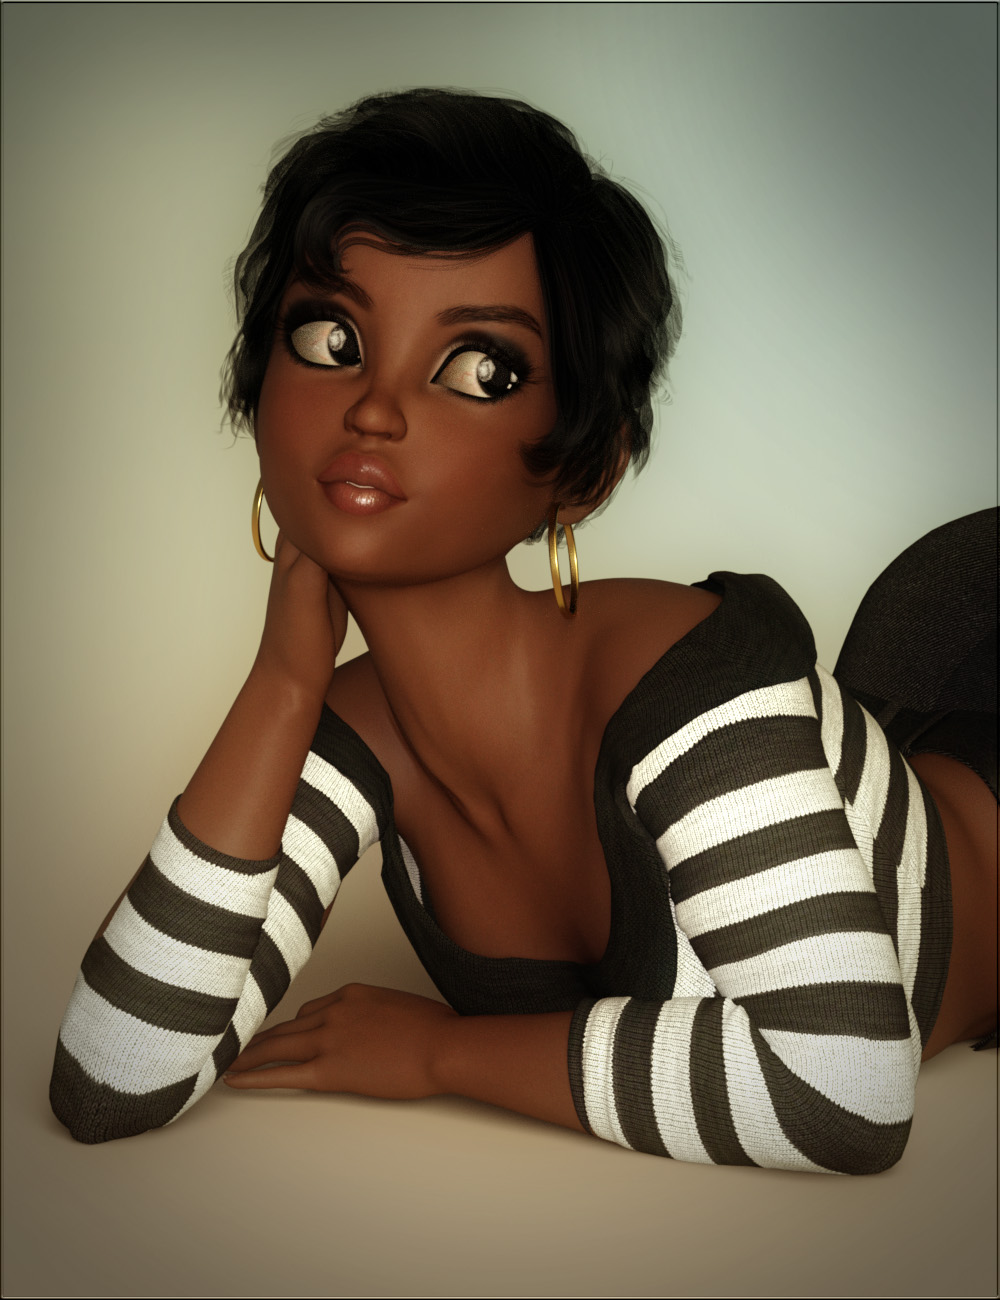 VYK Patty for The Girl 8 by: vyktohria, 3D Models by Daz 3D